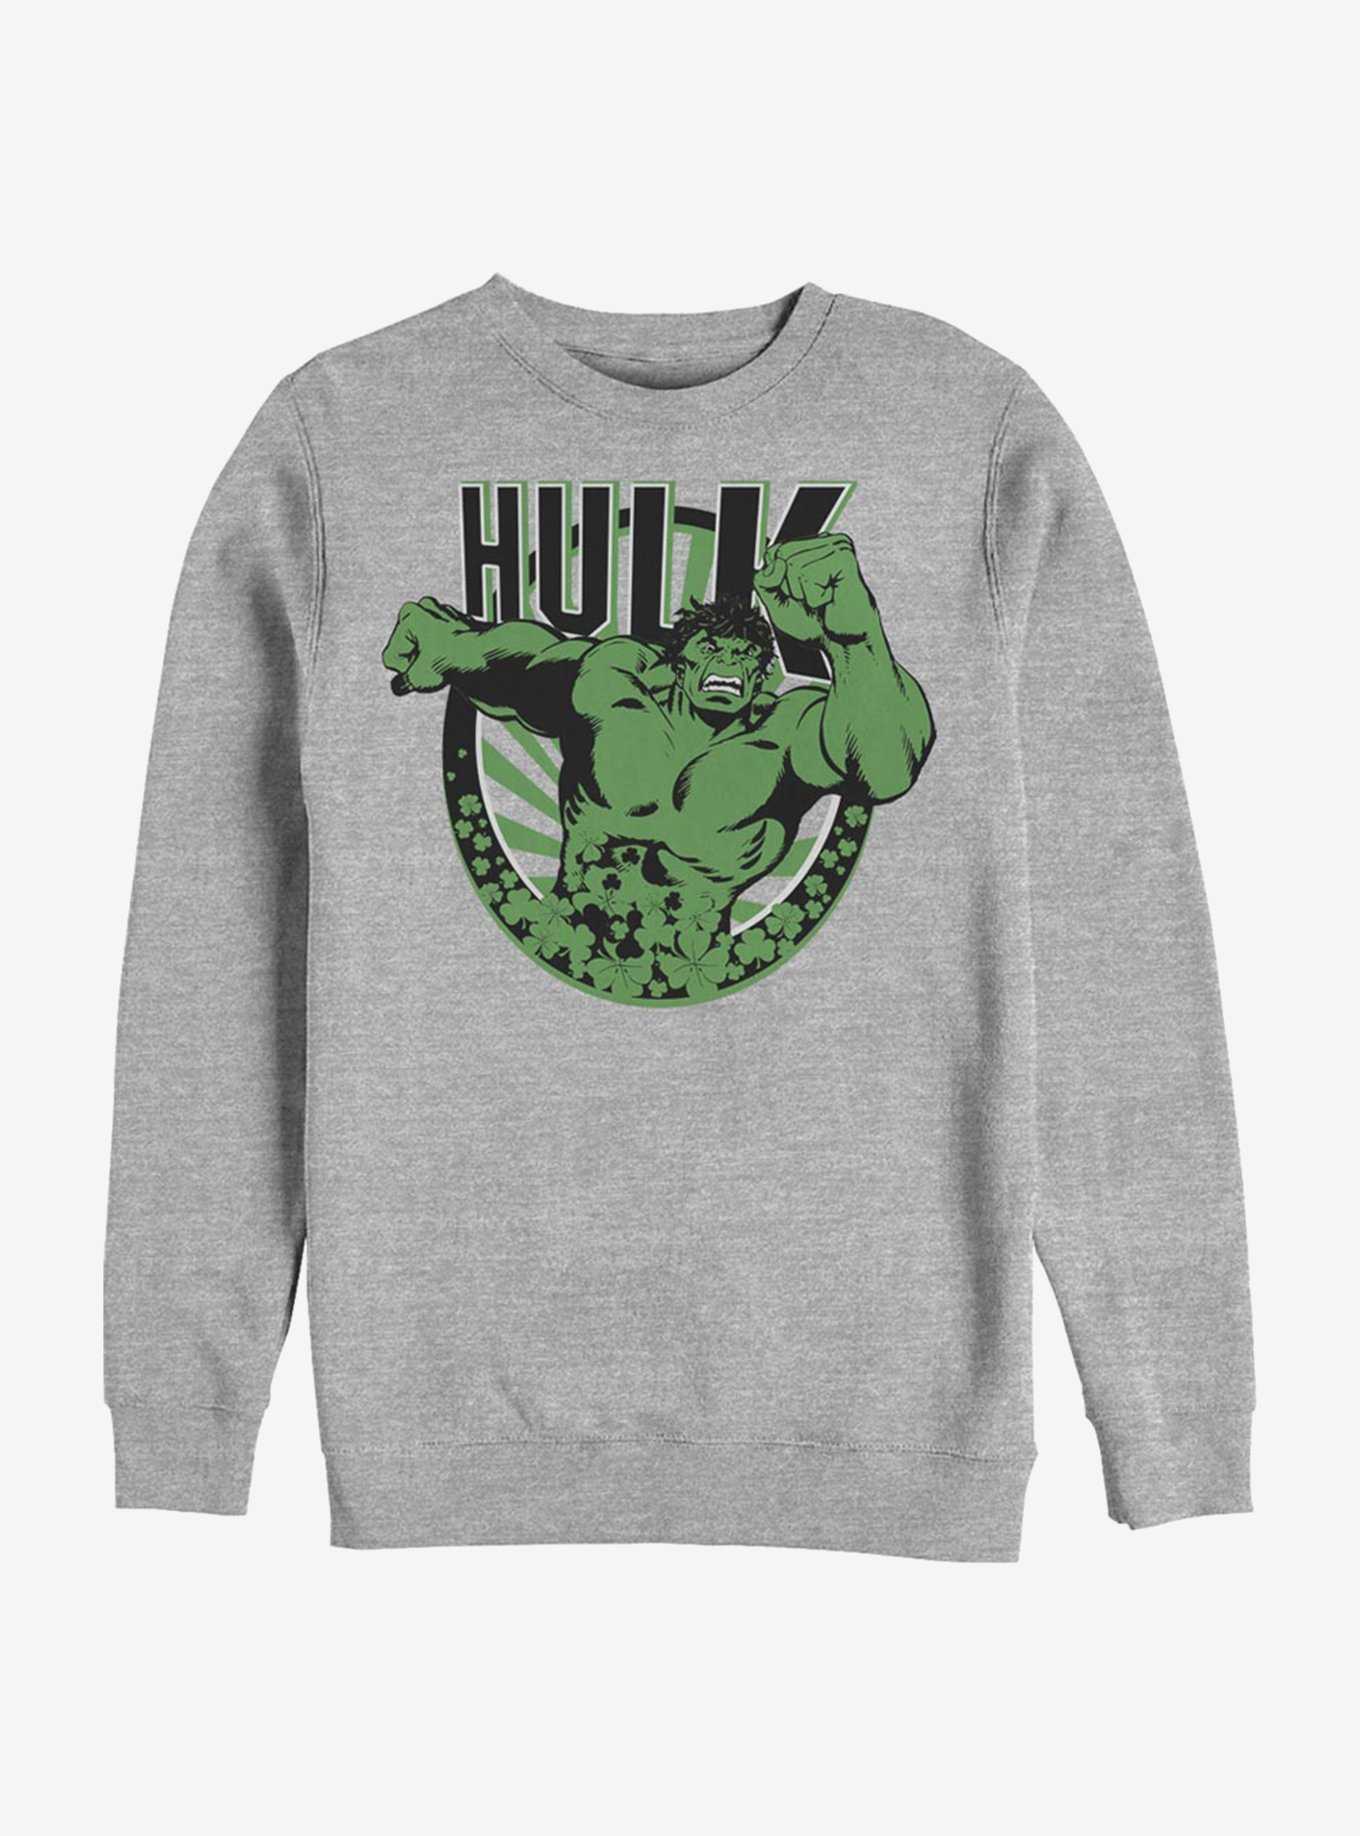 Marvel The Hulk Luck Crew Sweatshirt, , hi-res